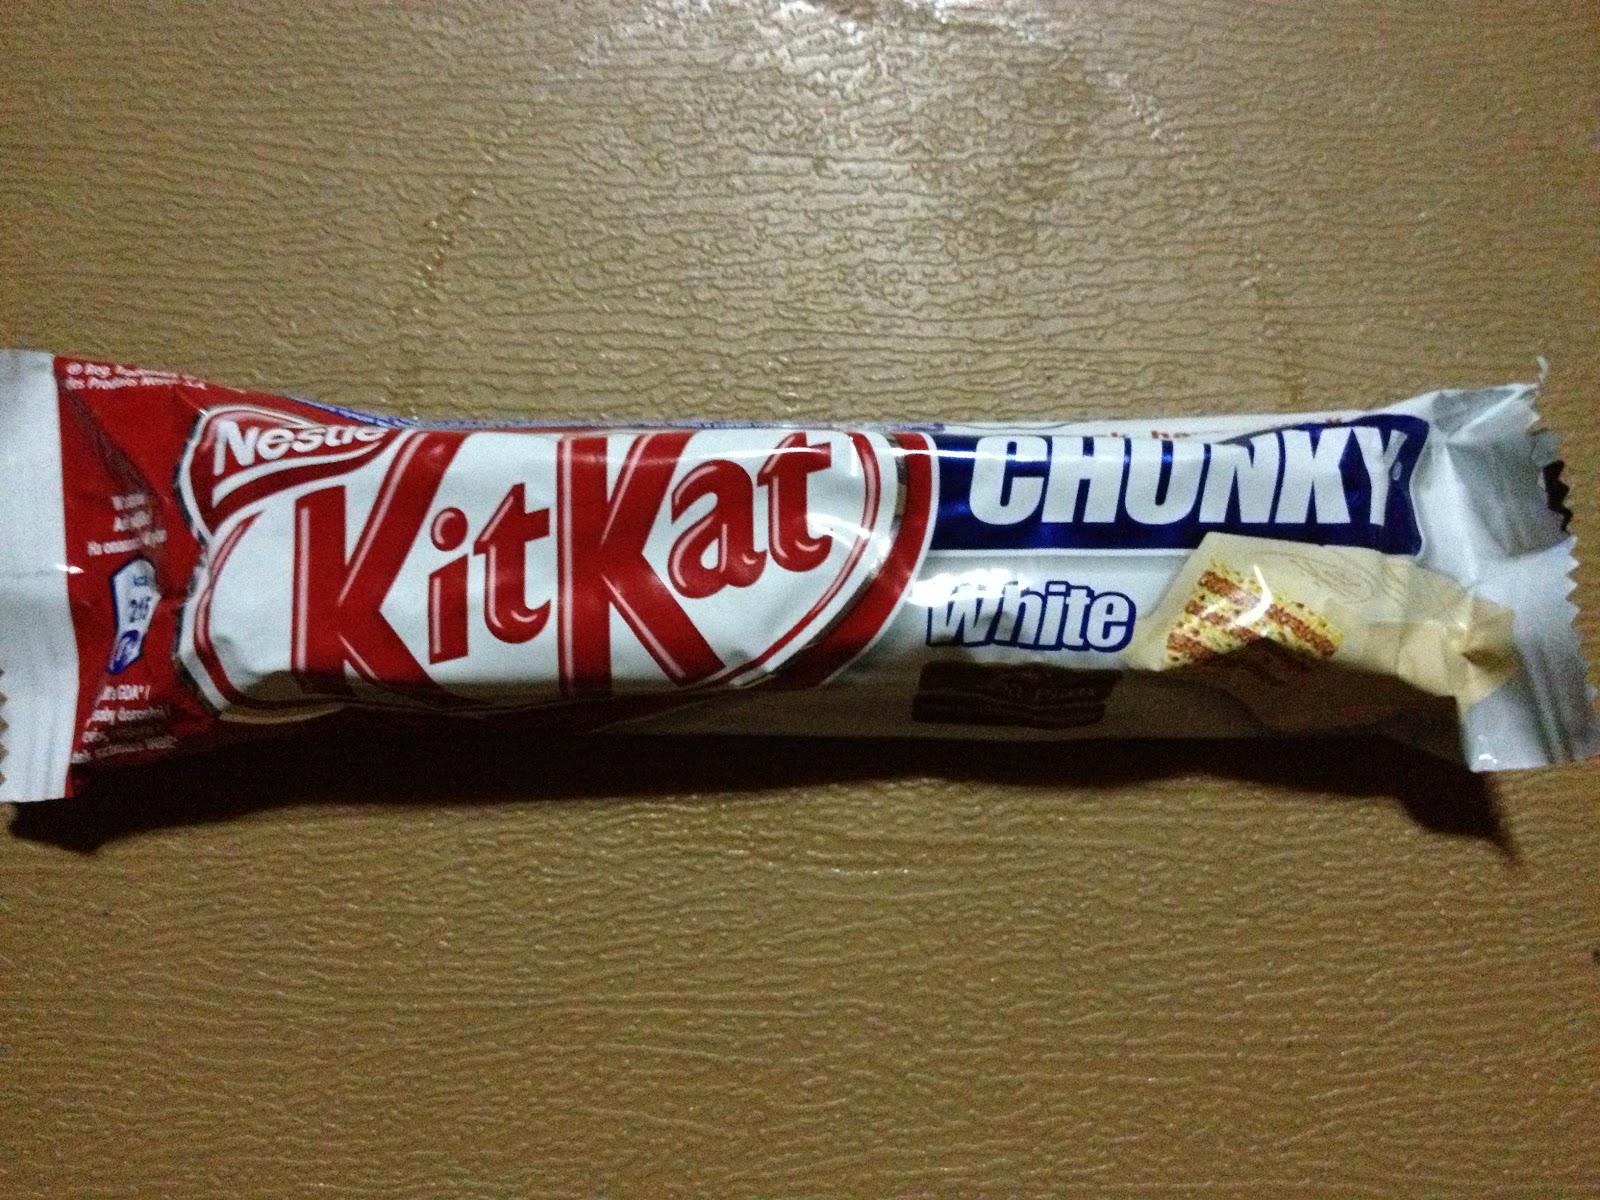 Stylestat: Nestle KitKat Chunky White